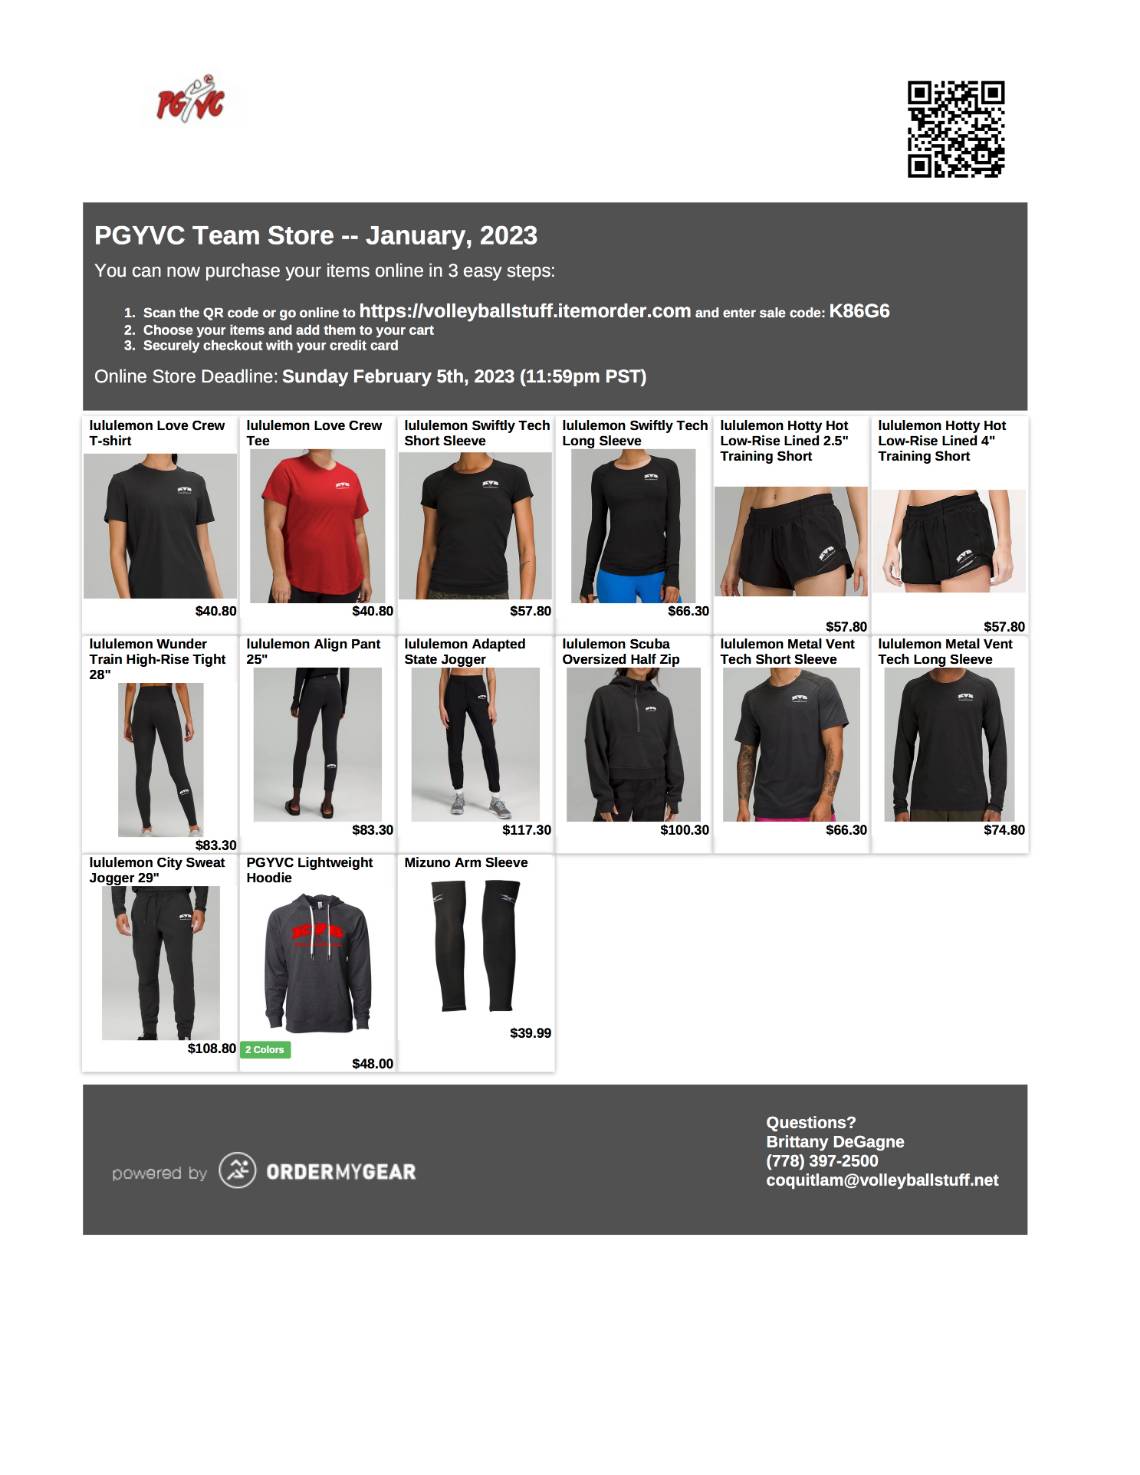 PGYVC Team Store -- January, 2023 - Flyer.jpg